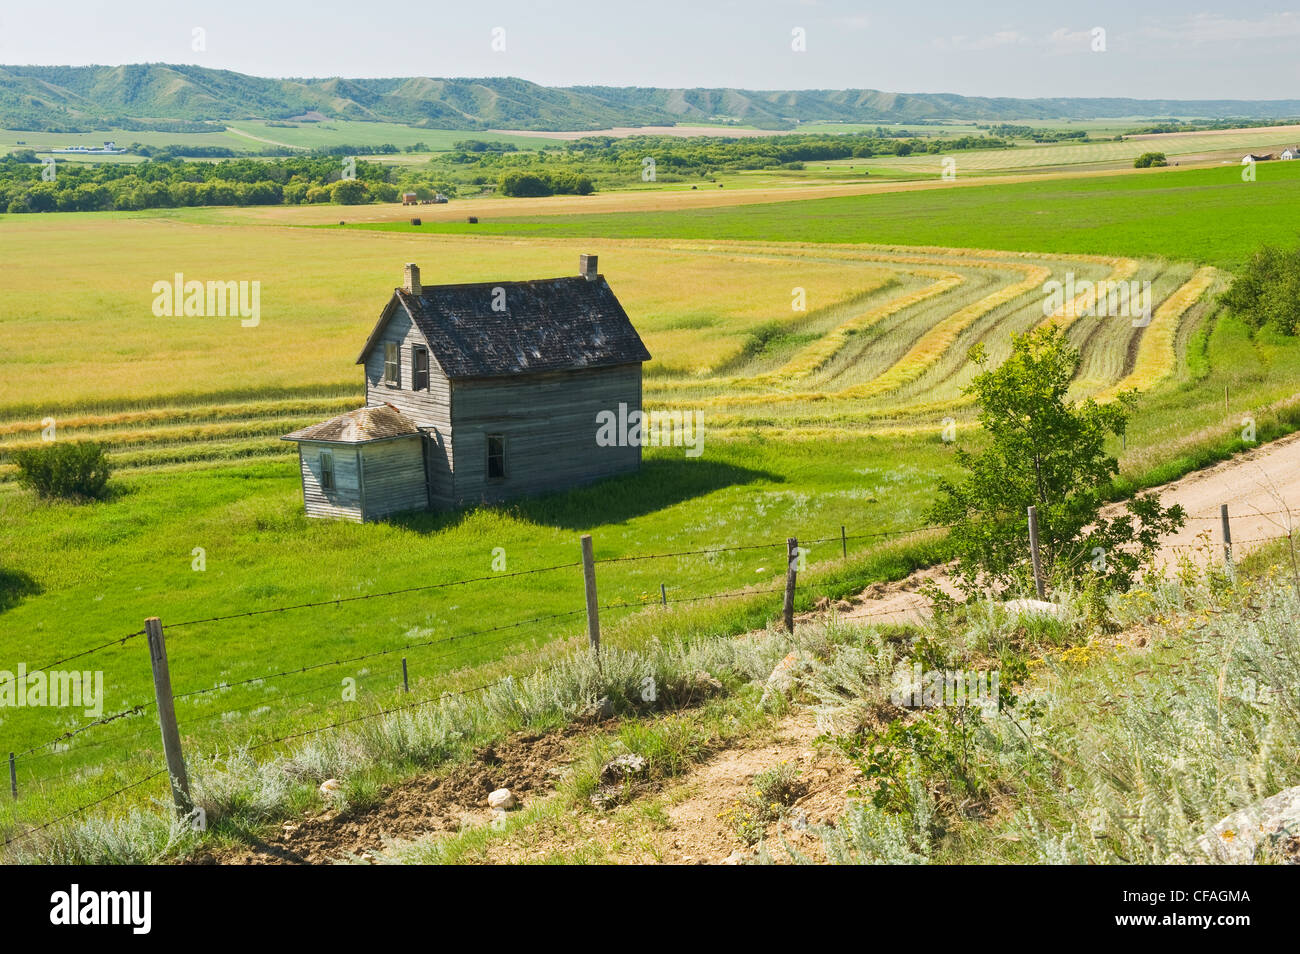 verlassenen Bauernhof in Raps Feld, qu Tal, Saskatchewan, Kanada Stockfoto